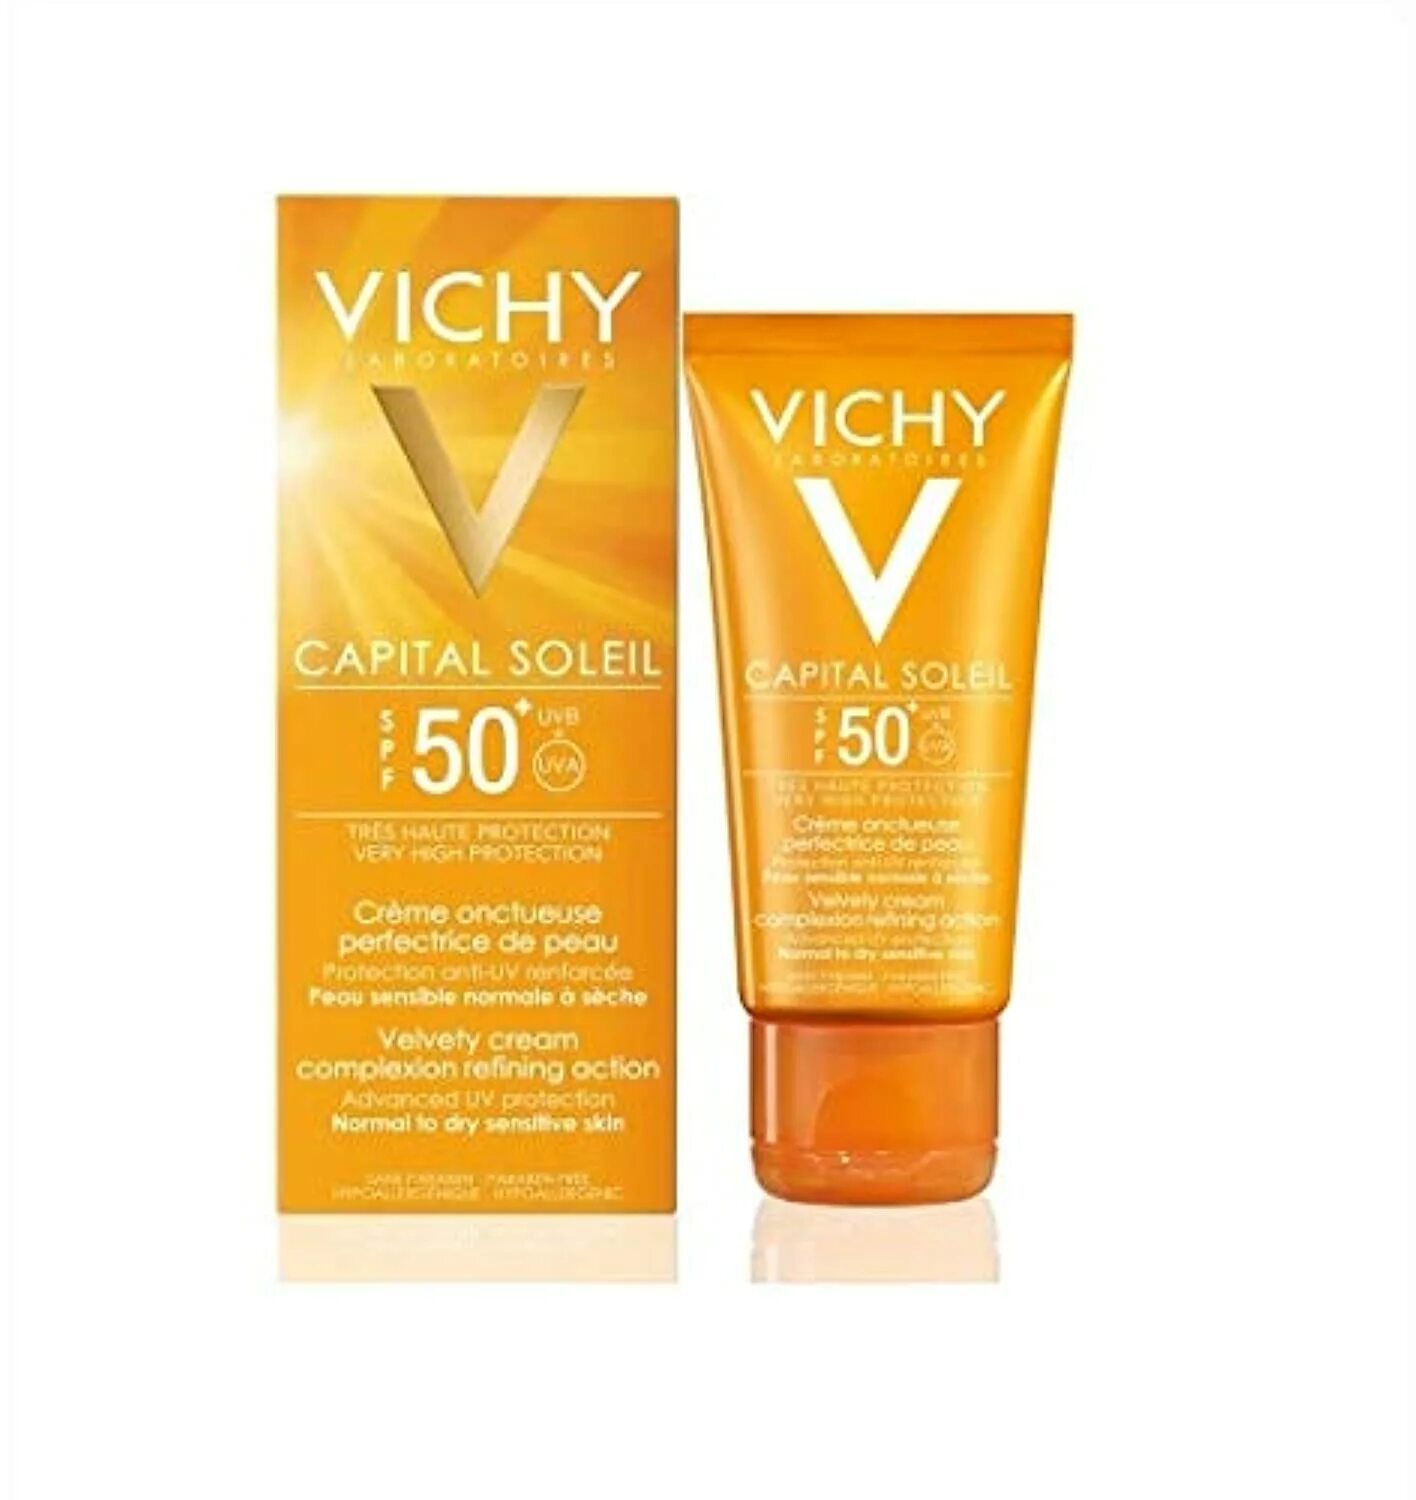 Capital soleil 50 мл. Vichy SPF 50. Vichy Sunscreen spf50 Capital Soleil velvety Cream 50ml. Виши идеал солей 50. Виши Солейл 50.